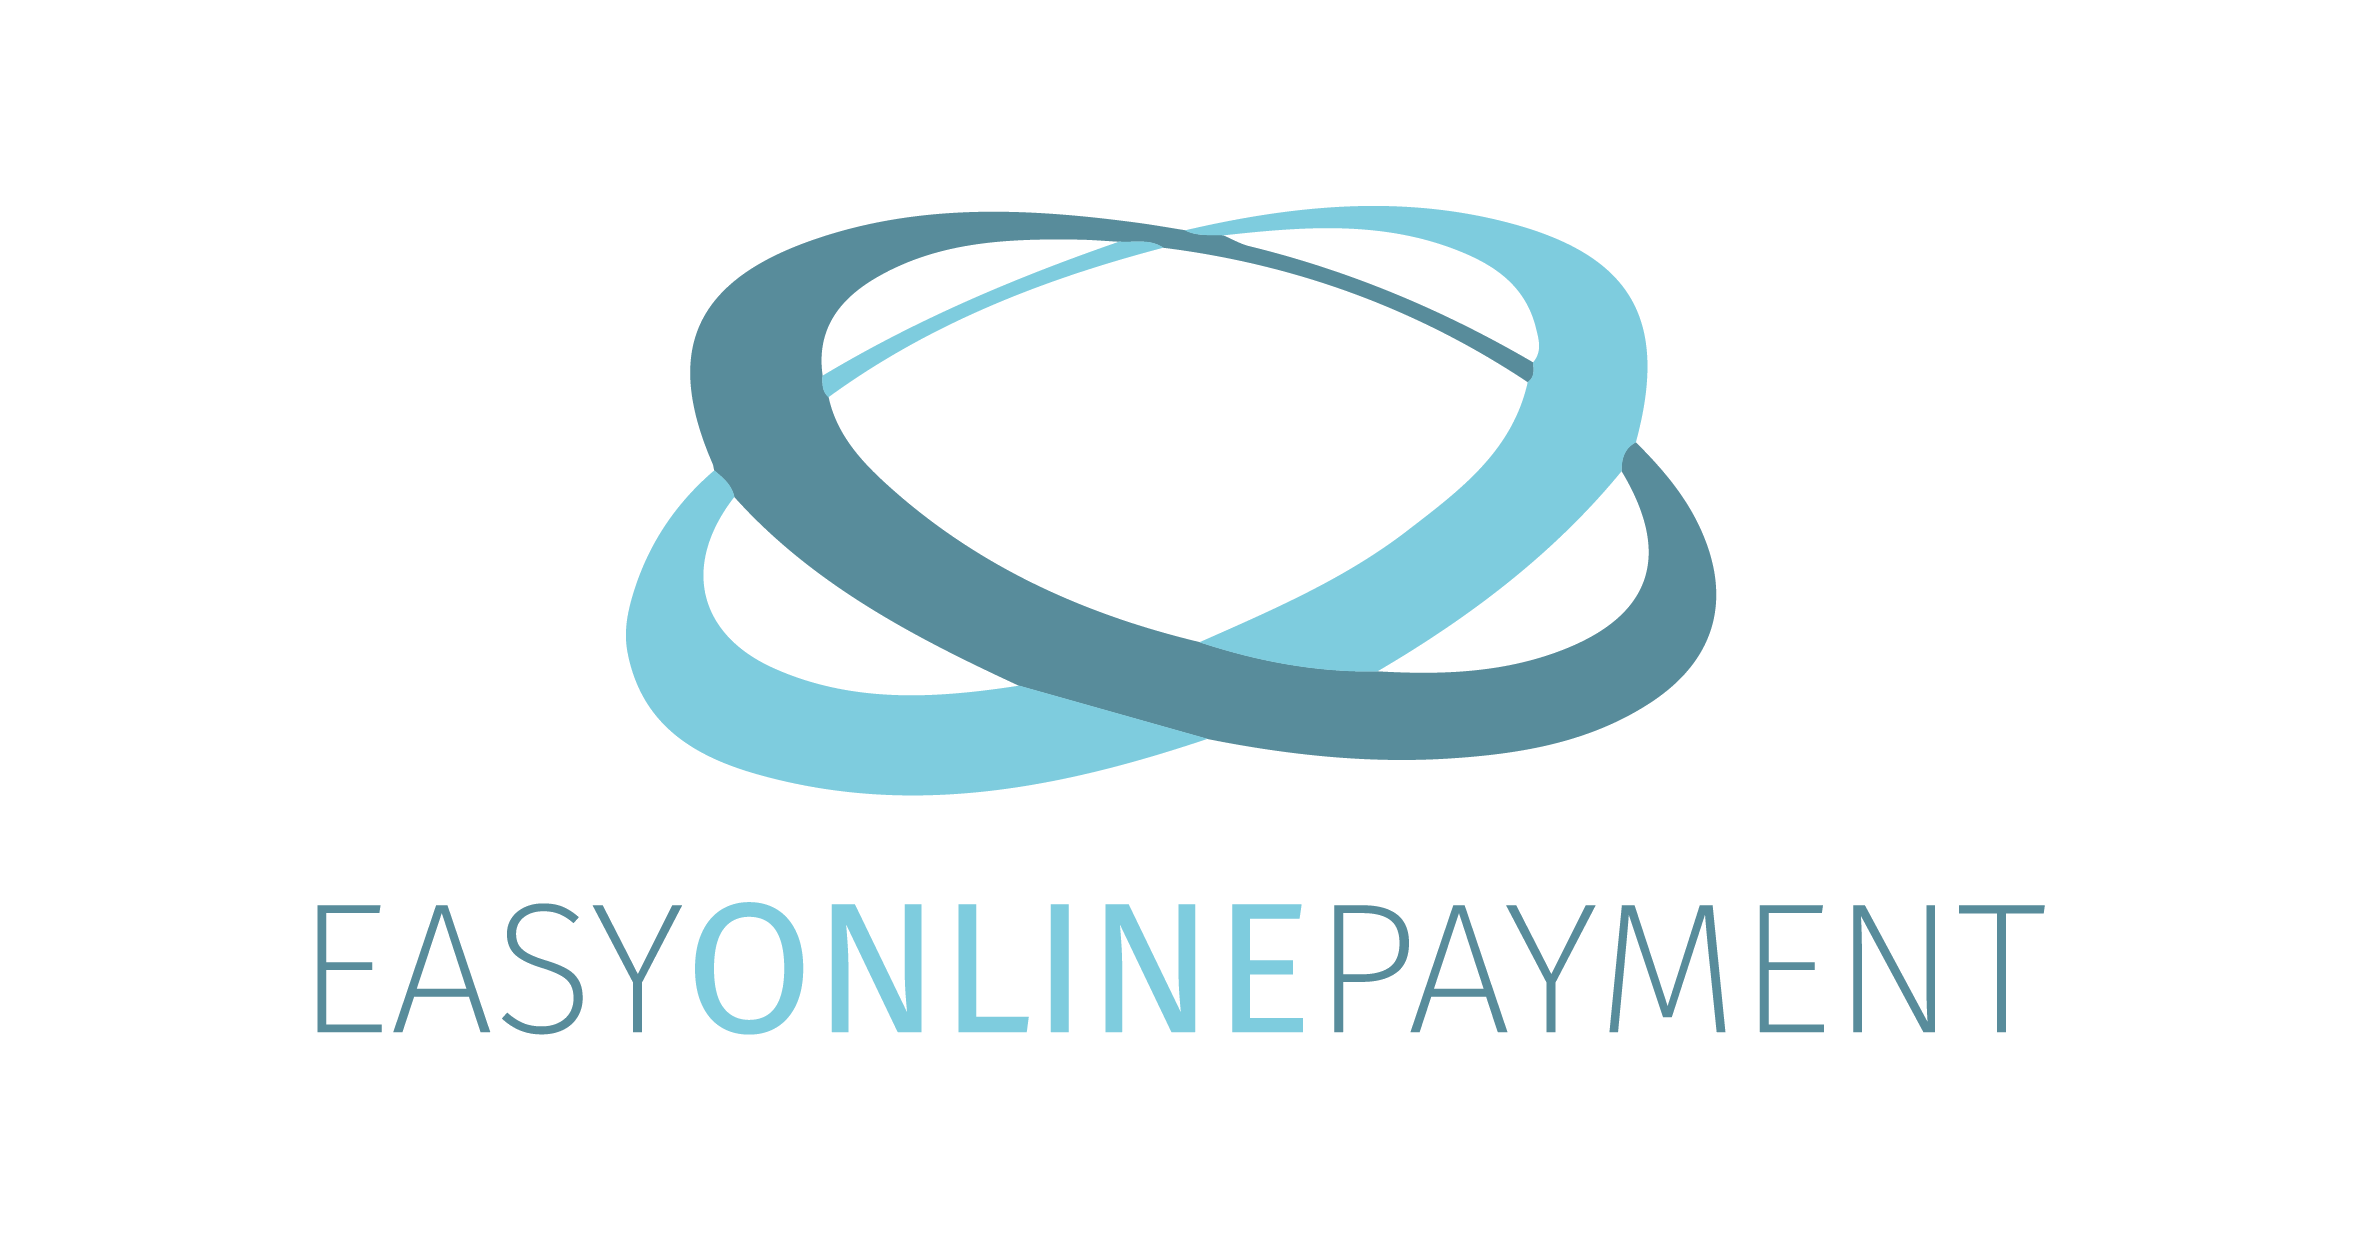 (c) Easy-online-payment.com